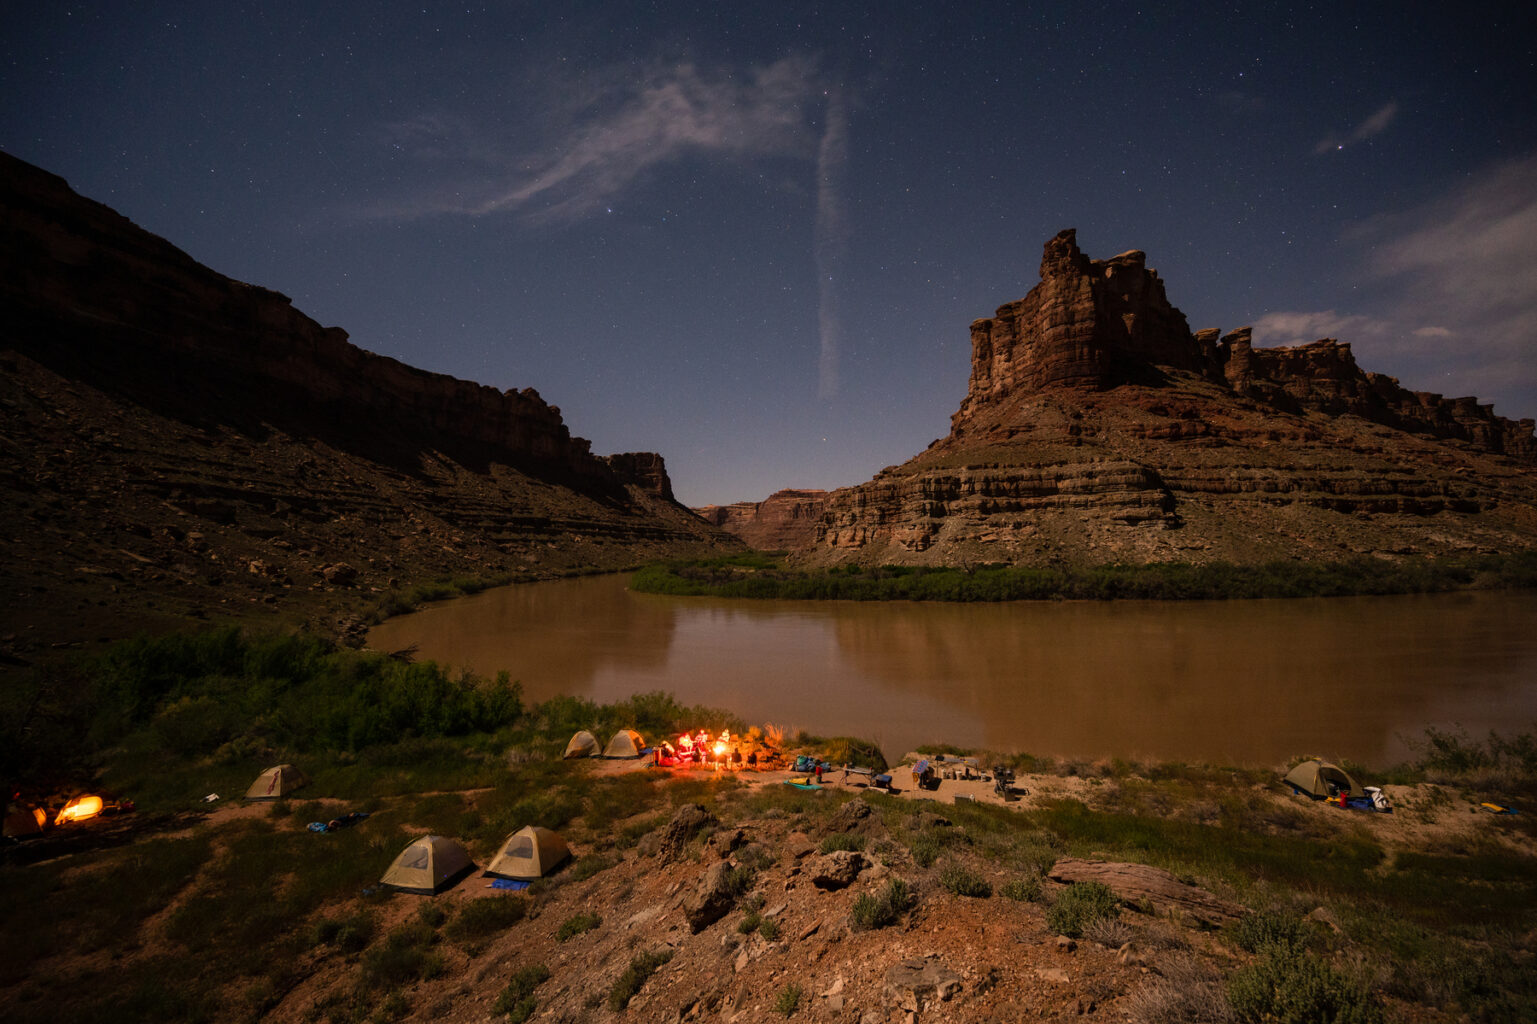 Campsiste along the Colorado River in Cataract Canayon at night